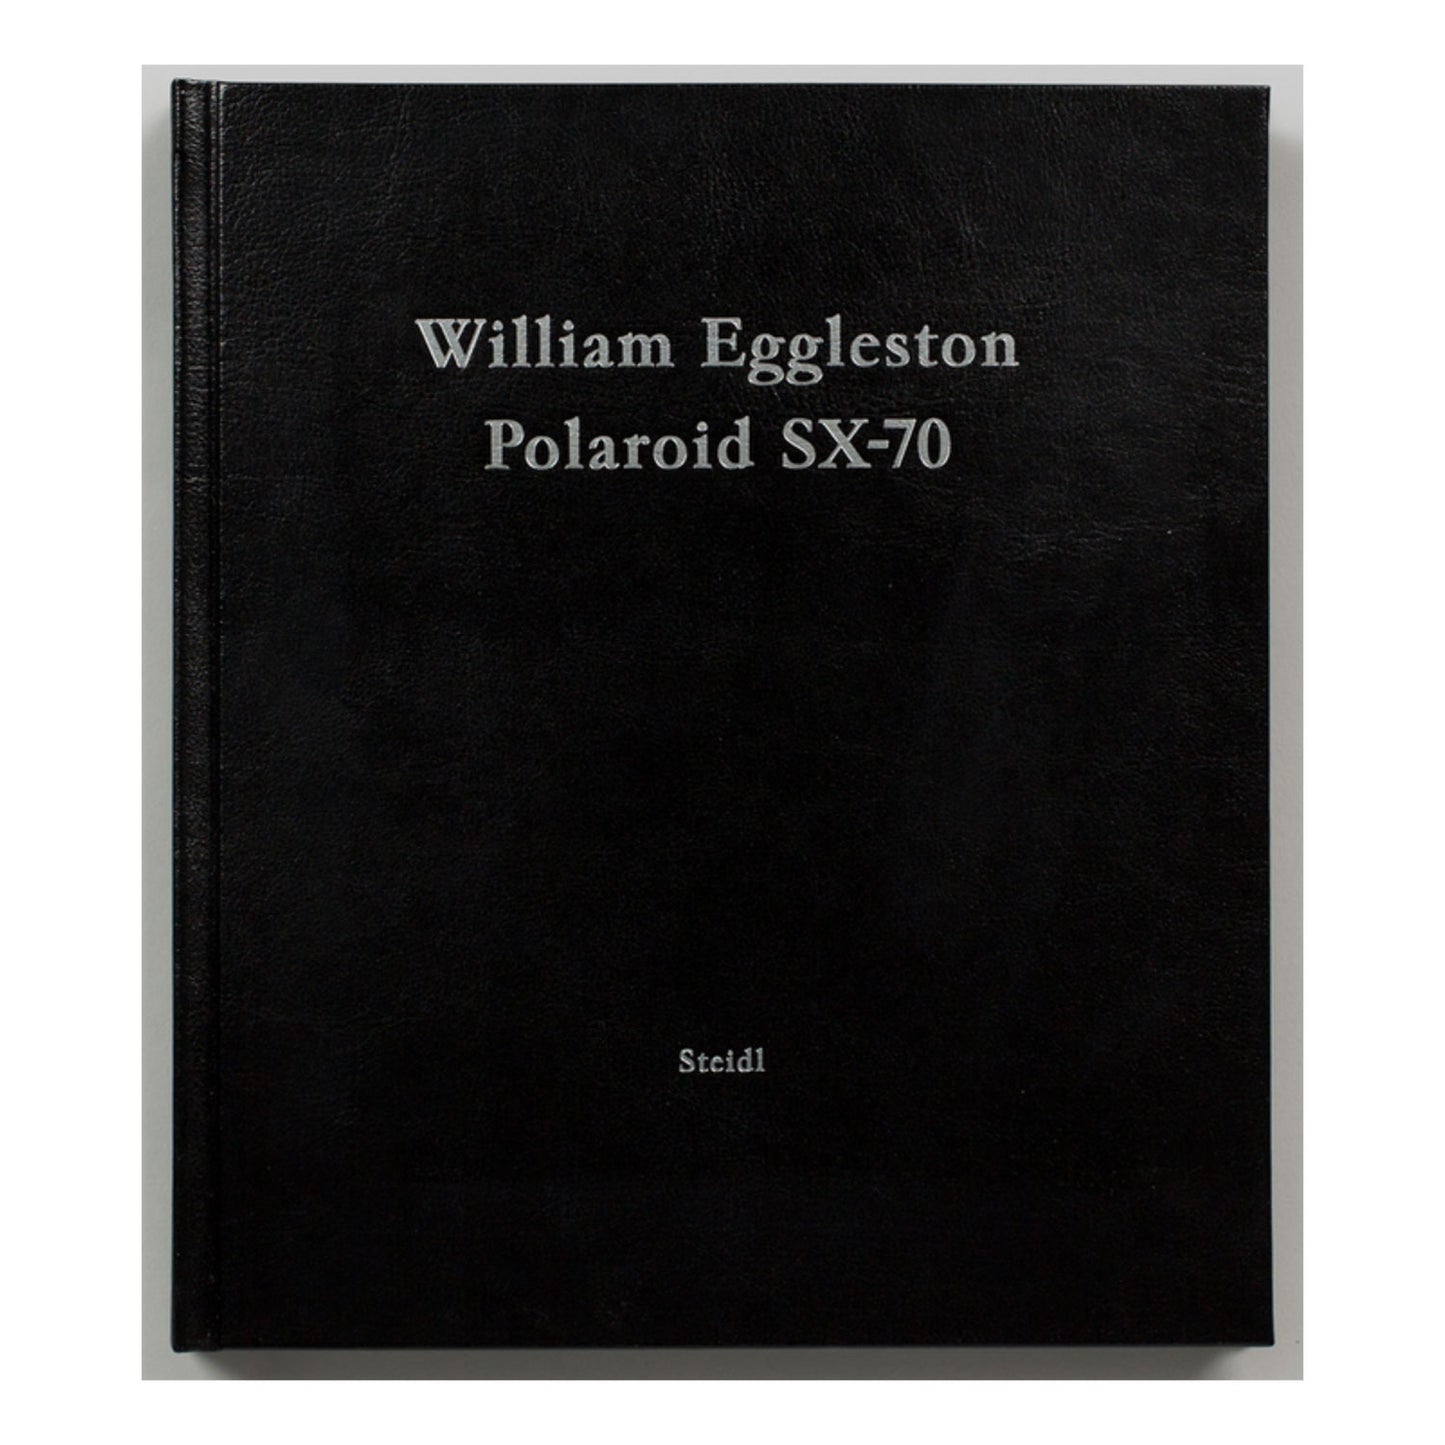 Polaroid SX-70 by William Eggleston Photo Museum Ireland